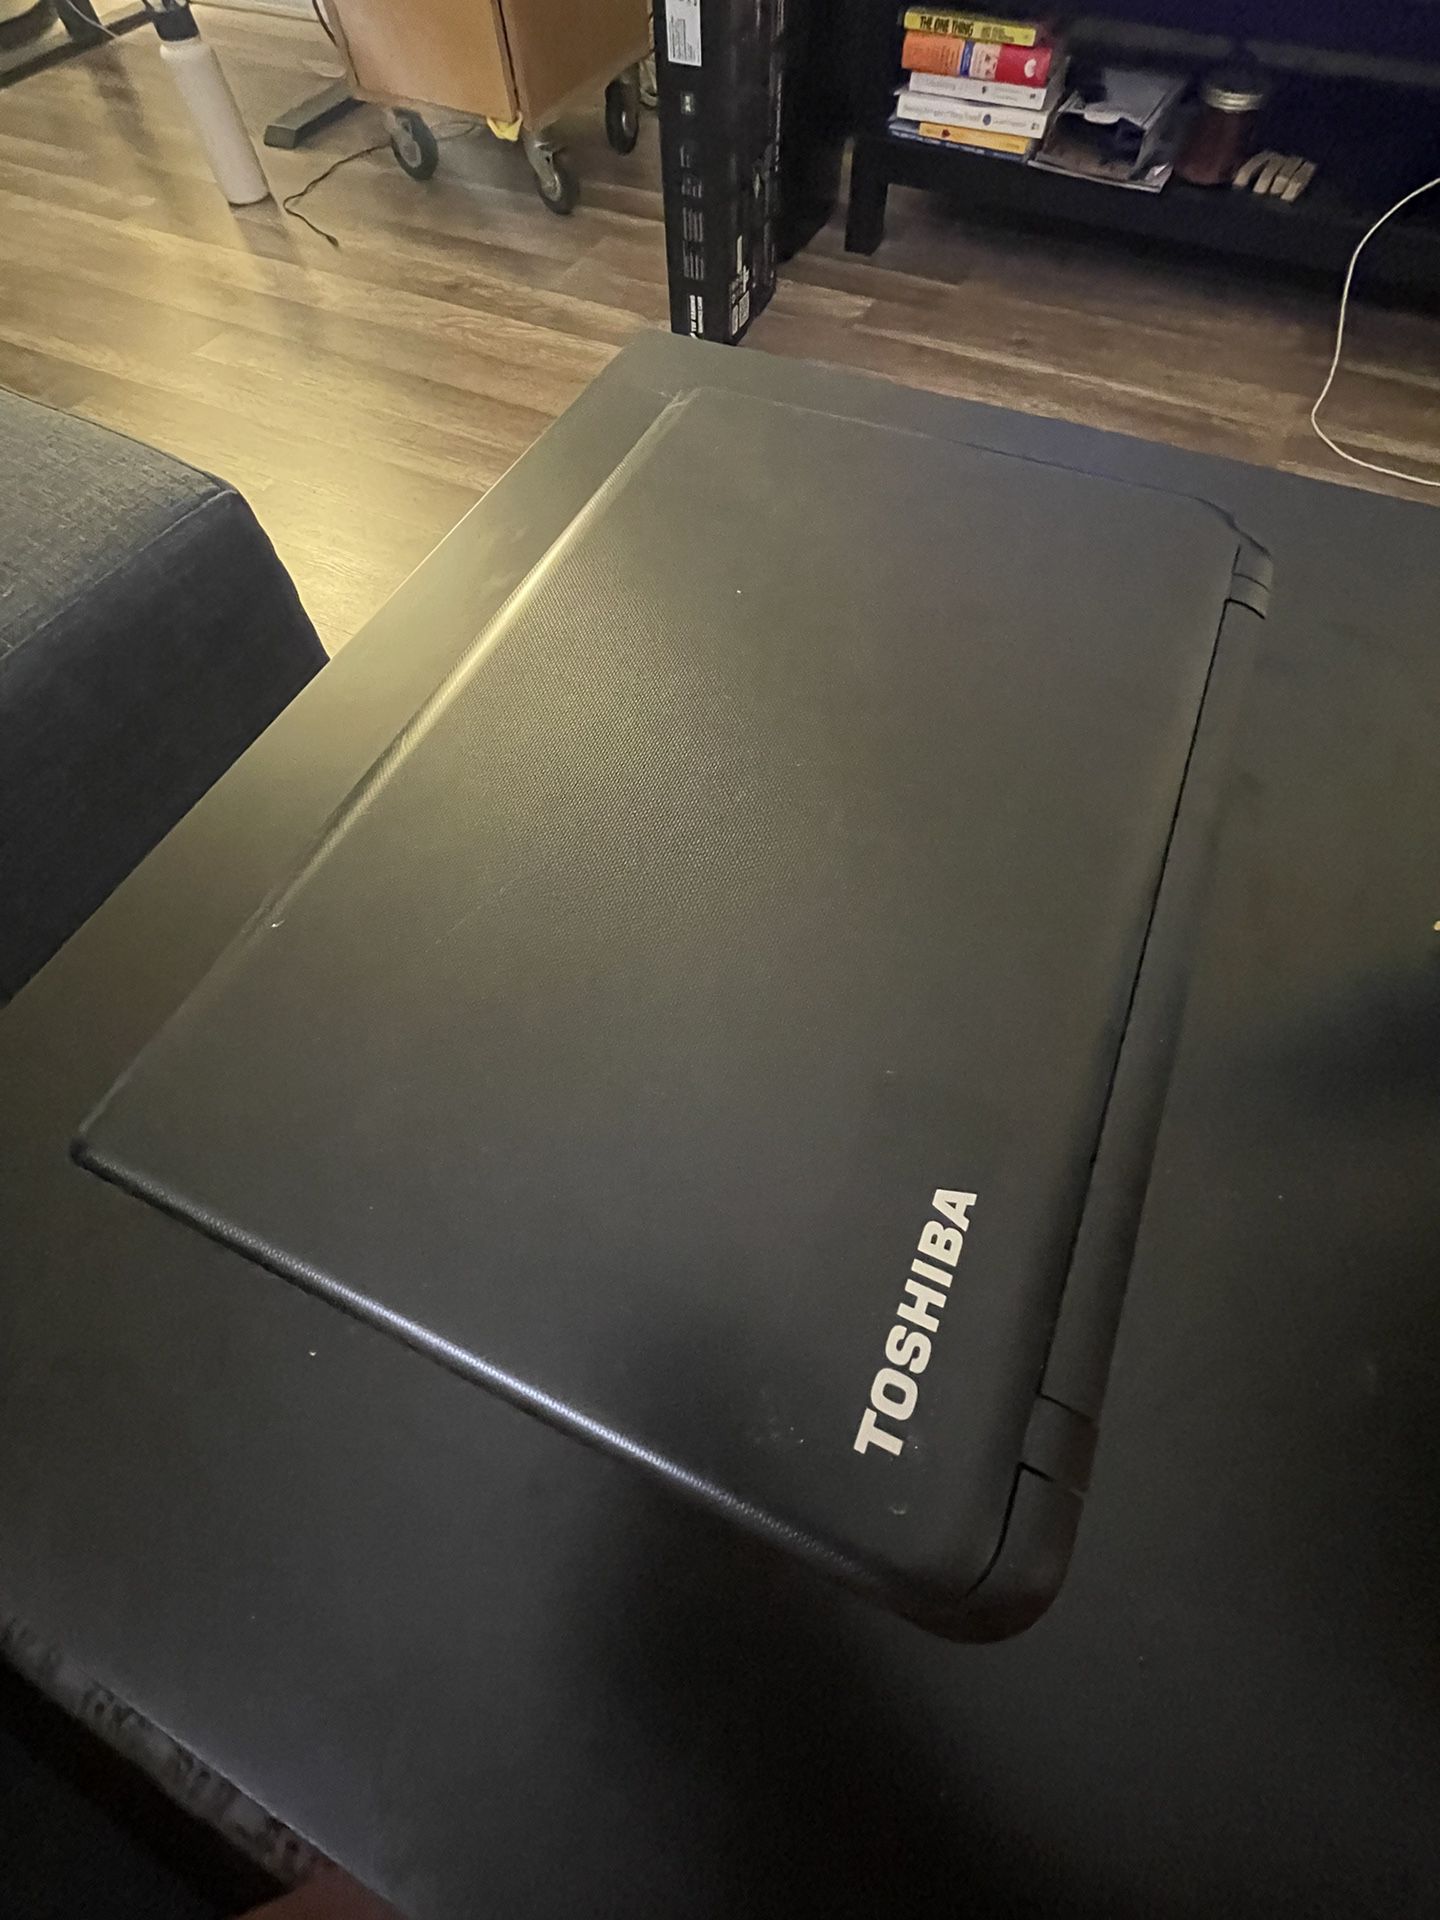 Toshiba PC Laptop AMD A8, 8gb Ram